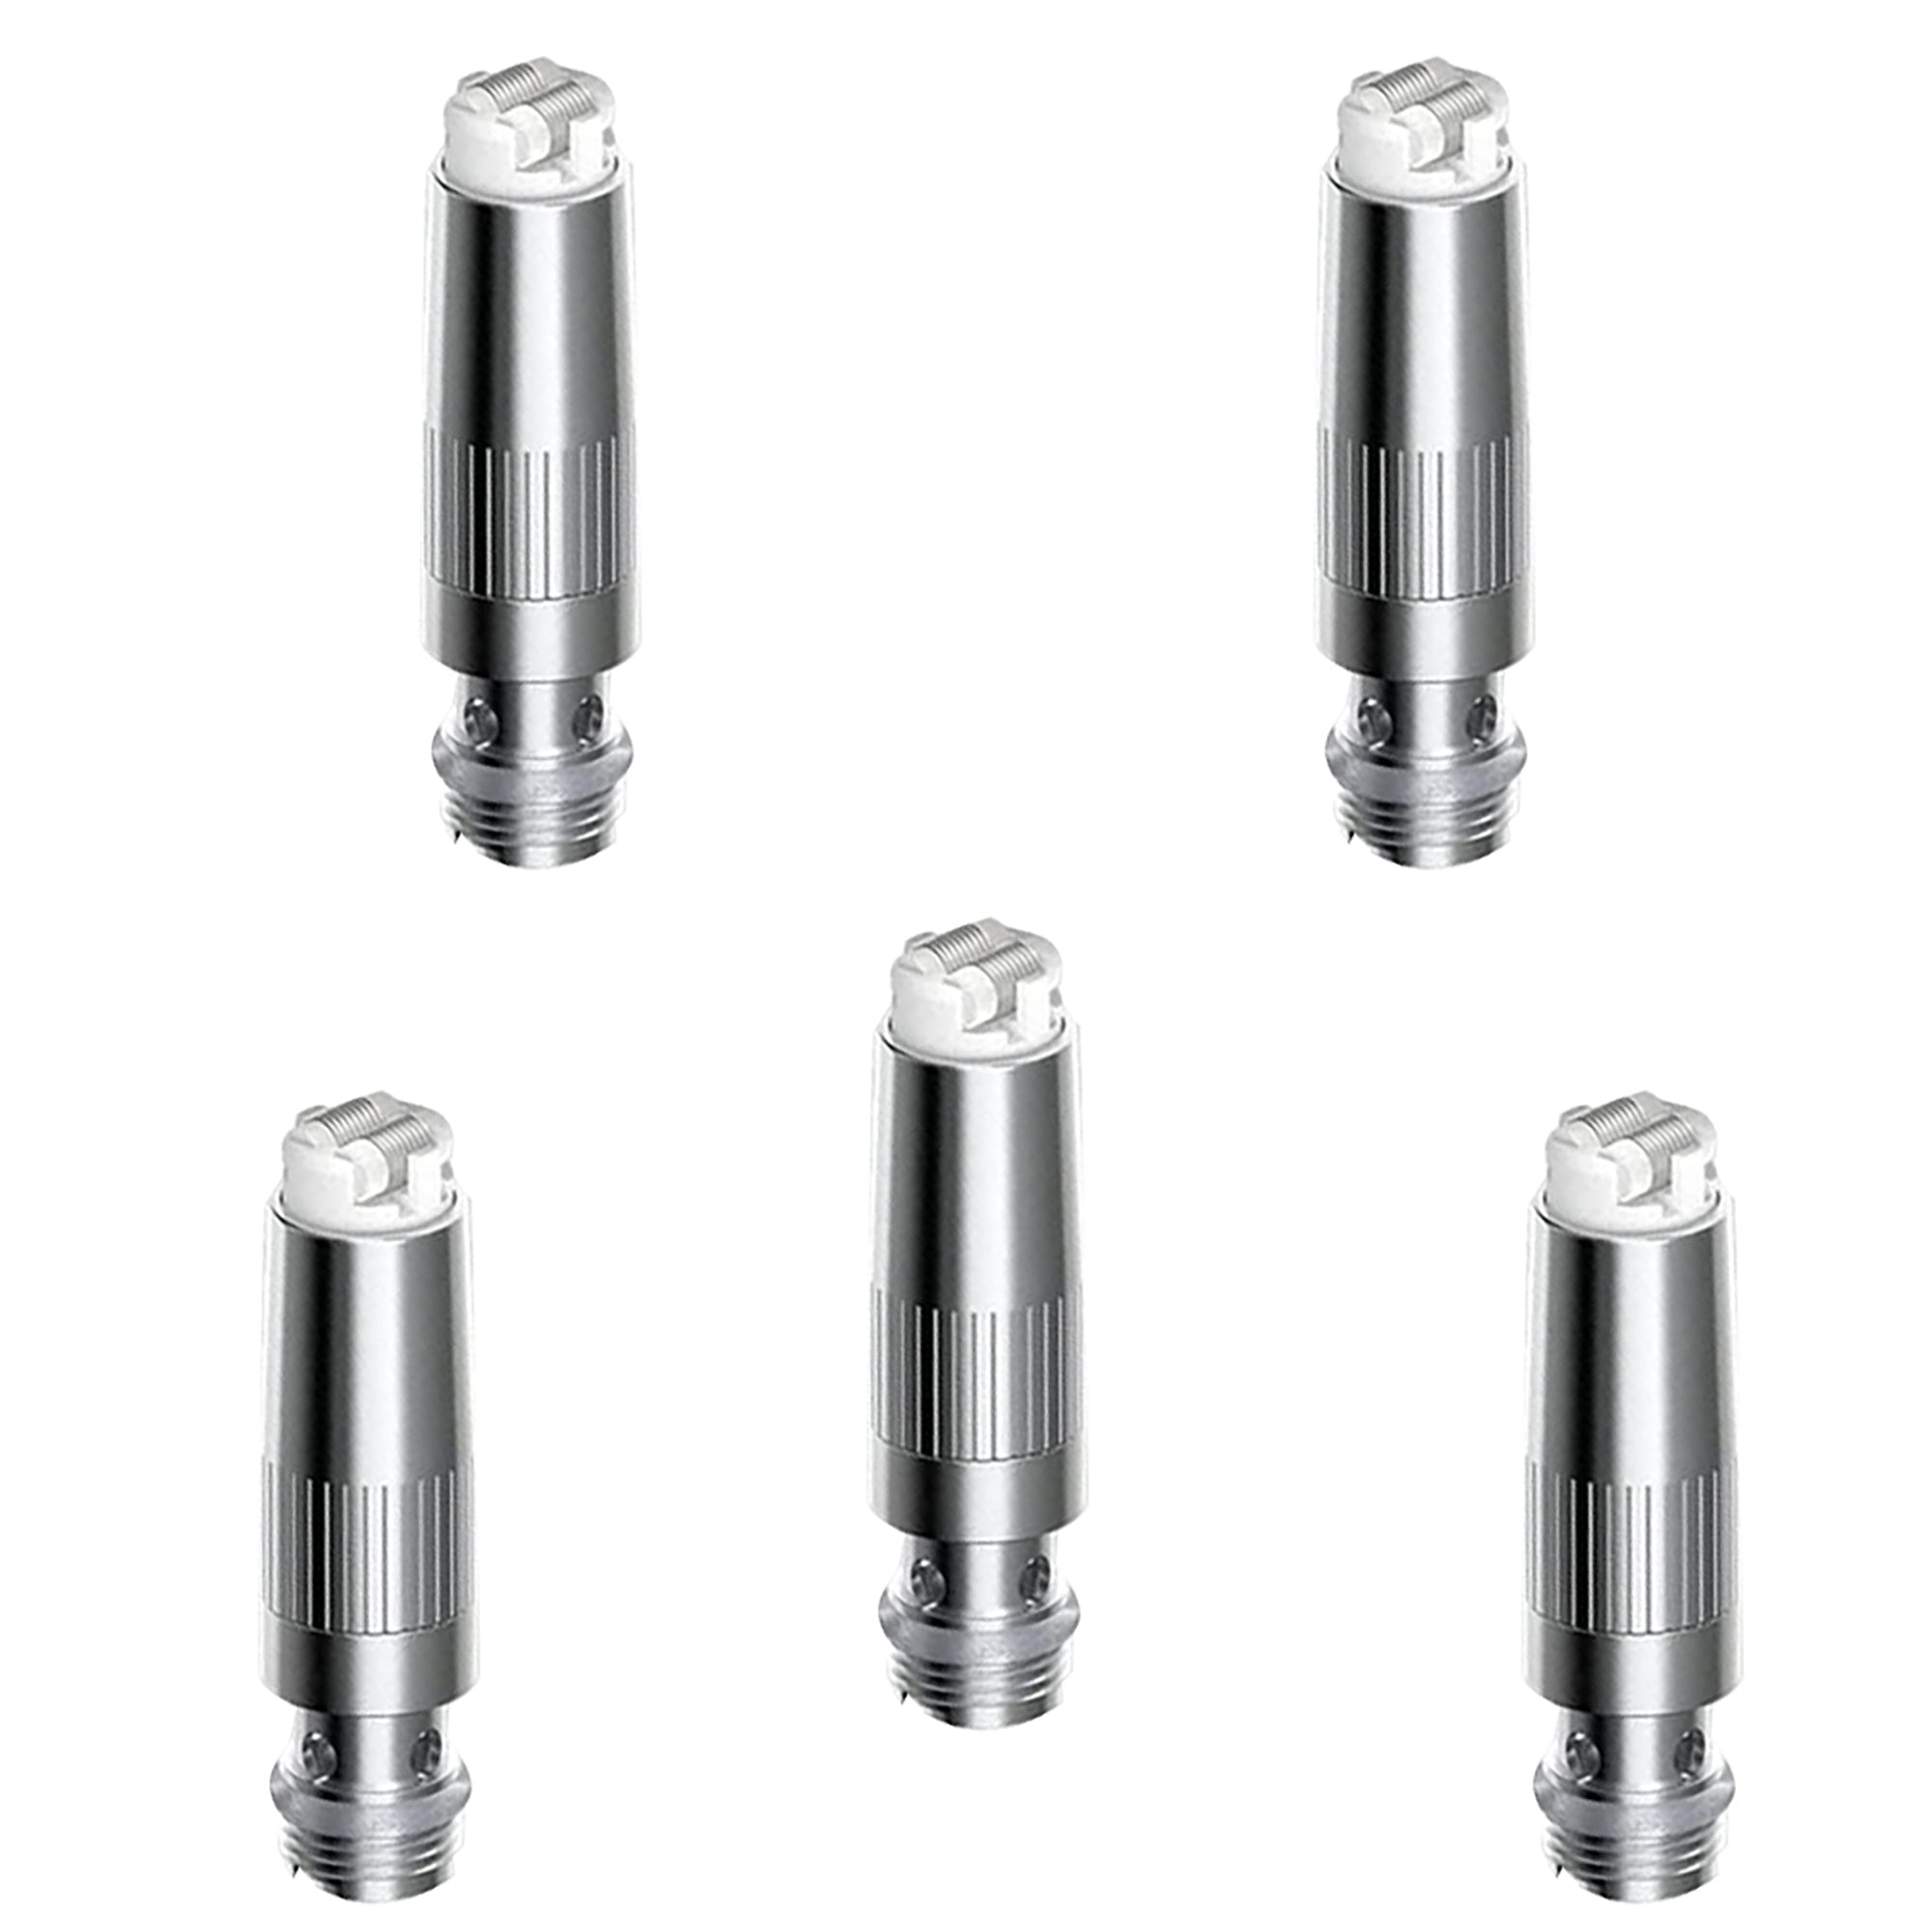 LONGMADA Terp Pen Coils Heating Element Accessories for Longmada, Silver (1Set - 5Pcs)